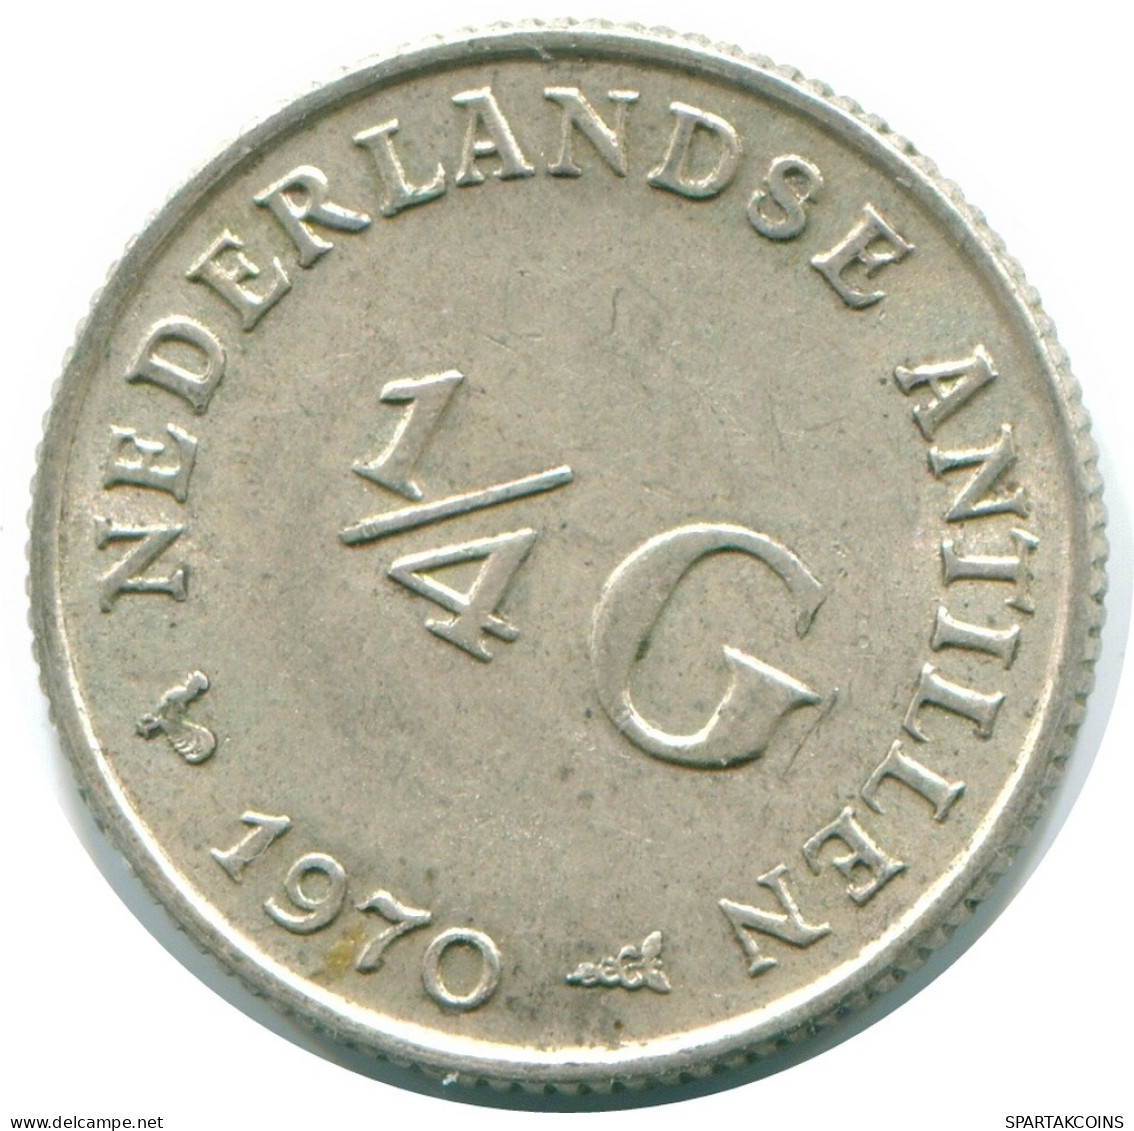 1/4 GULDEN 1970 NETHERLANDS ANTILLES SILVER Colonial Coin #NL11639.4.U.A - Niederländische Antillen